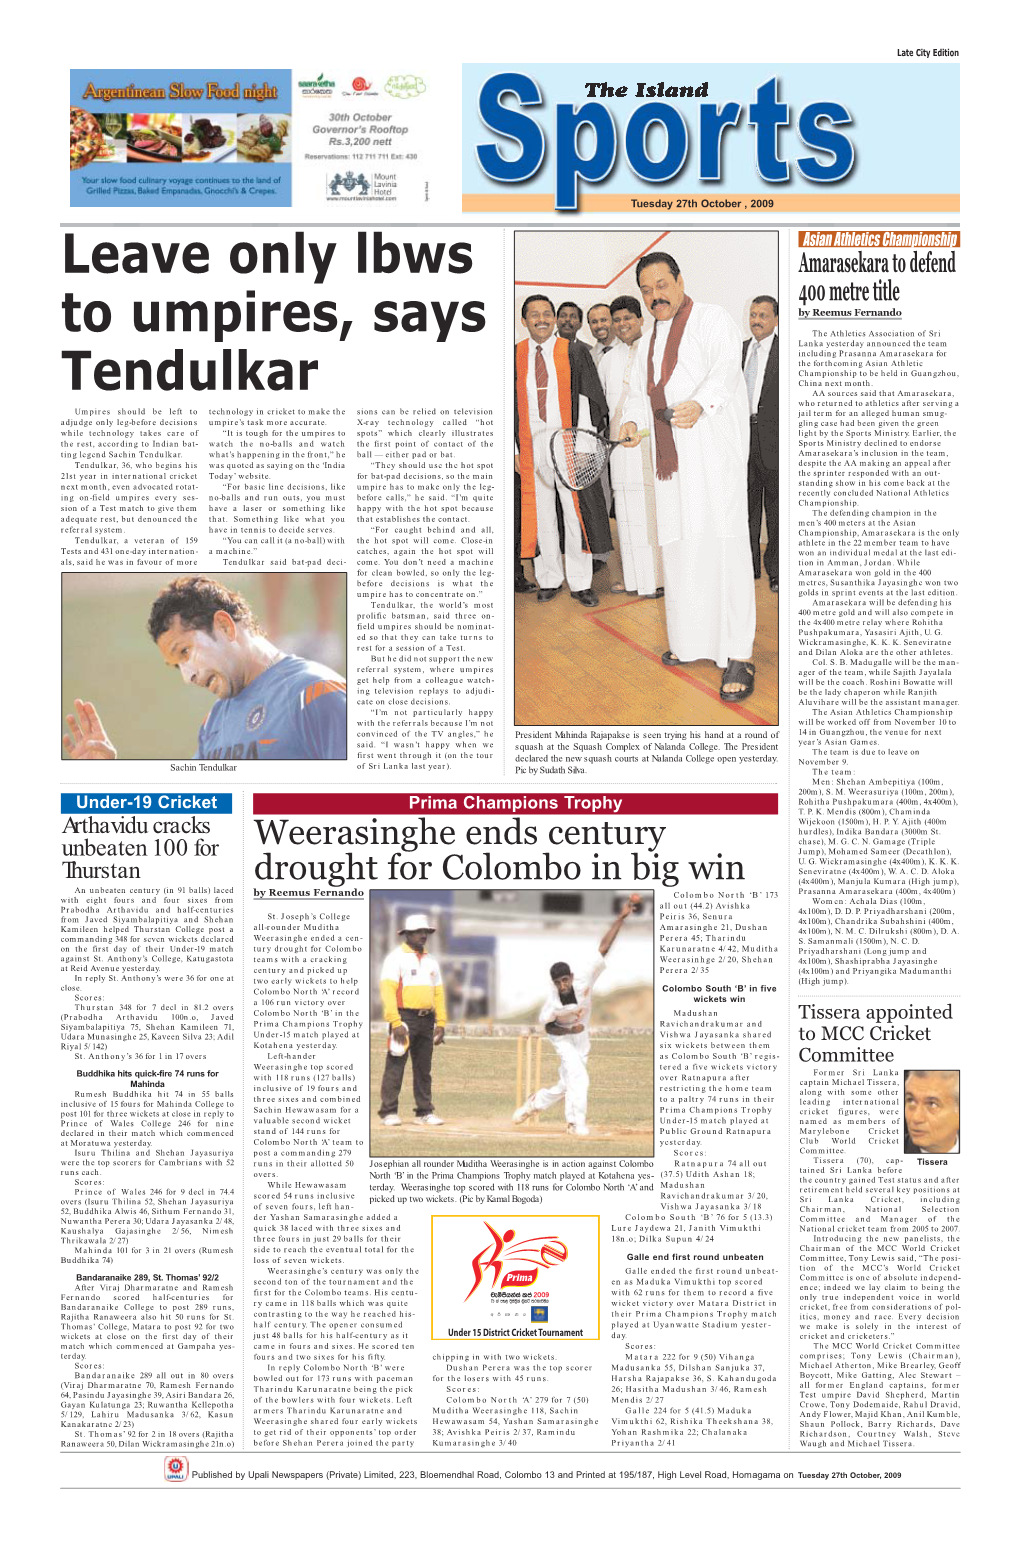 Leave Only Lbws to Umpires, Says Tendulkar